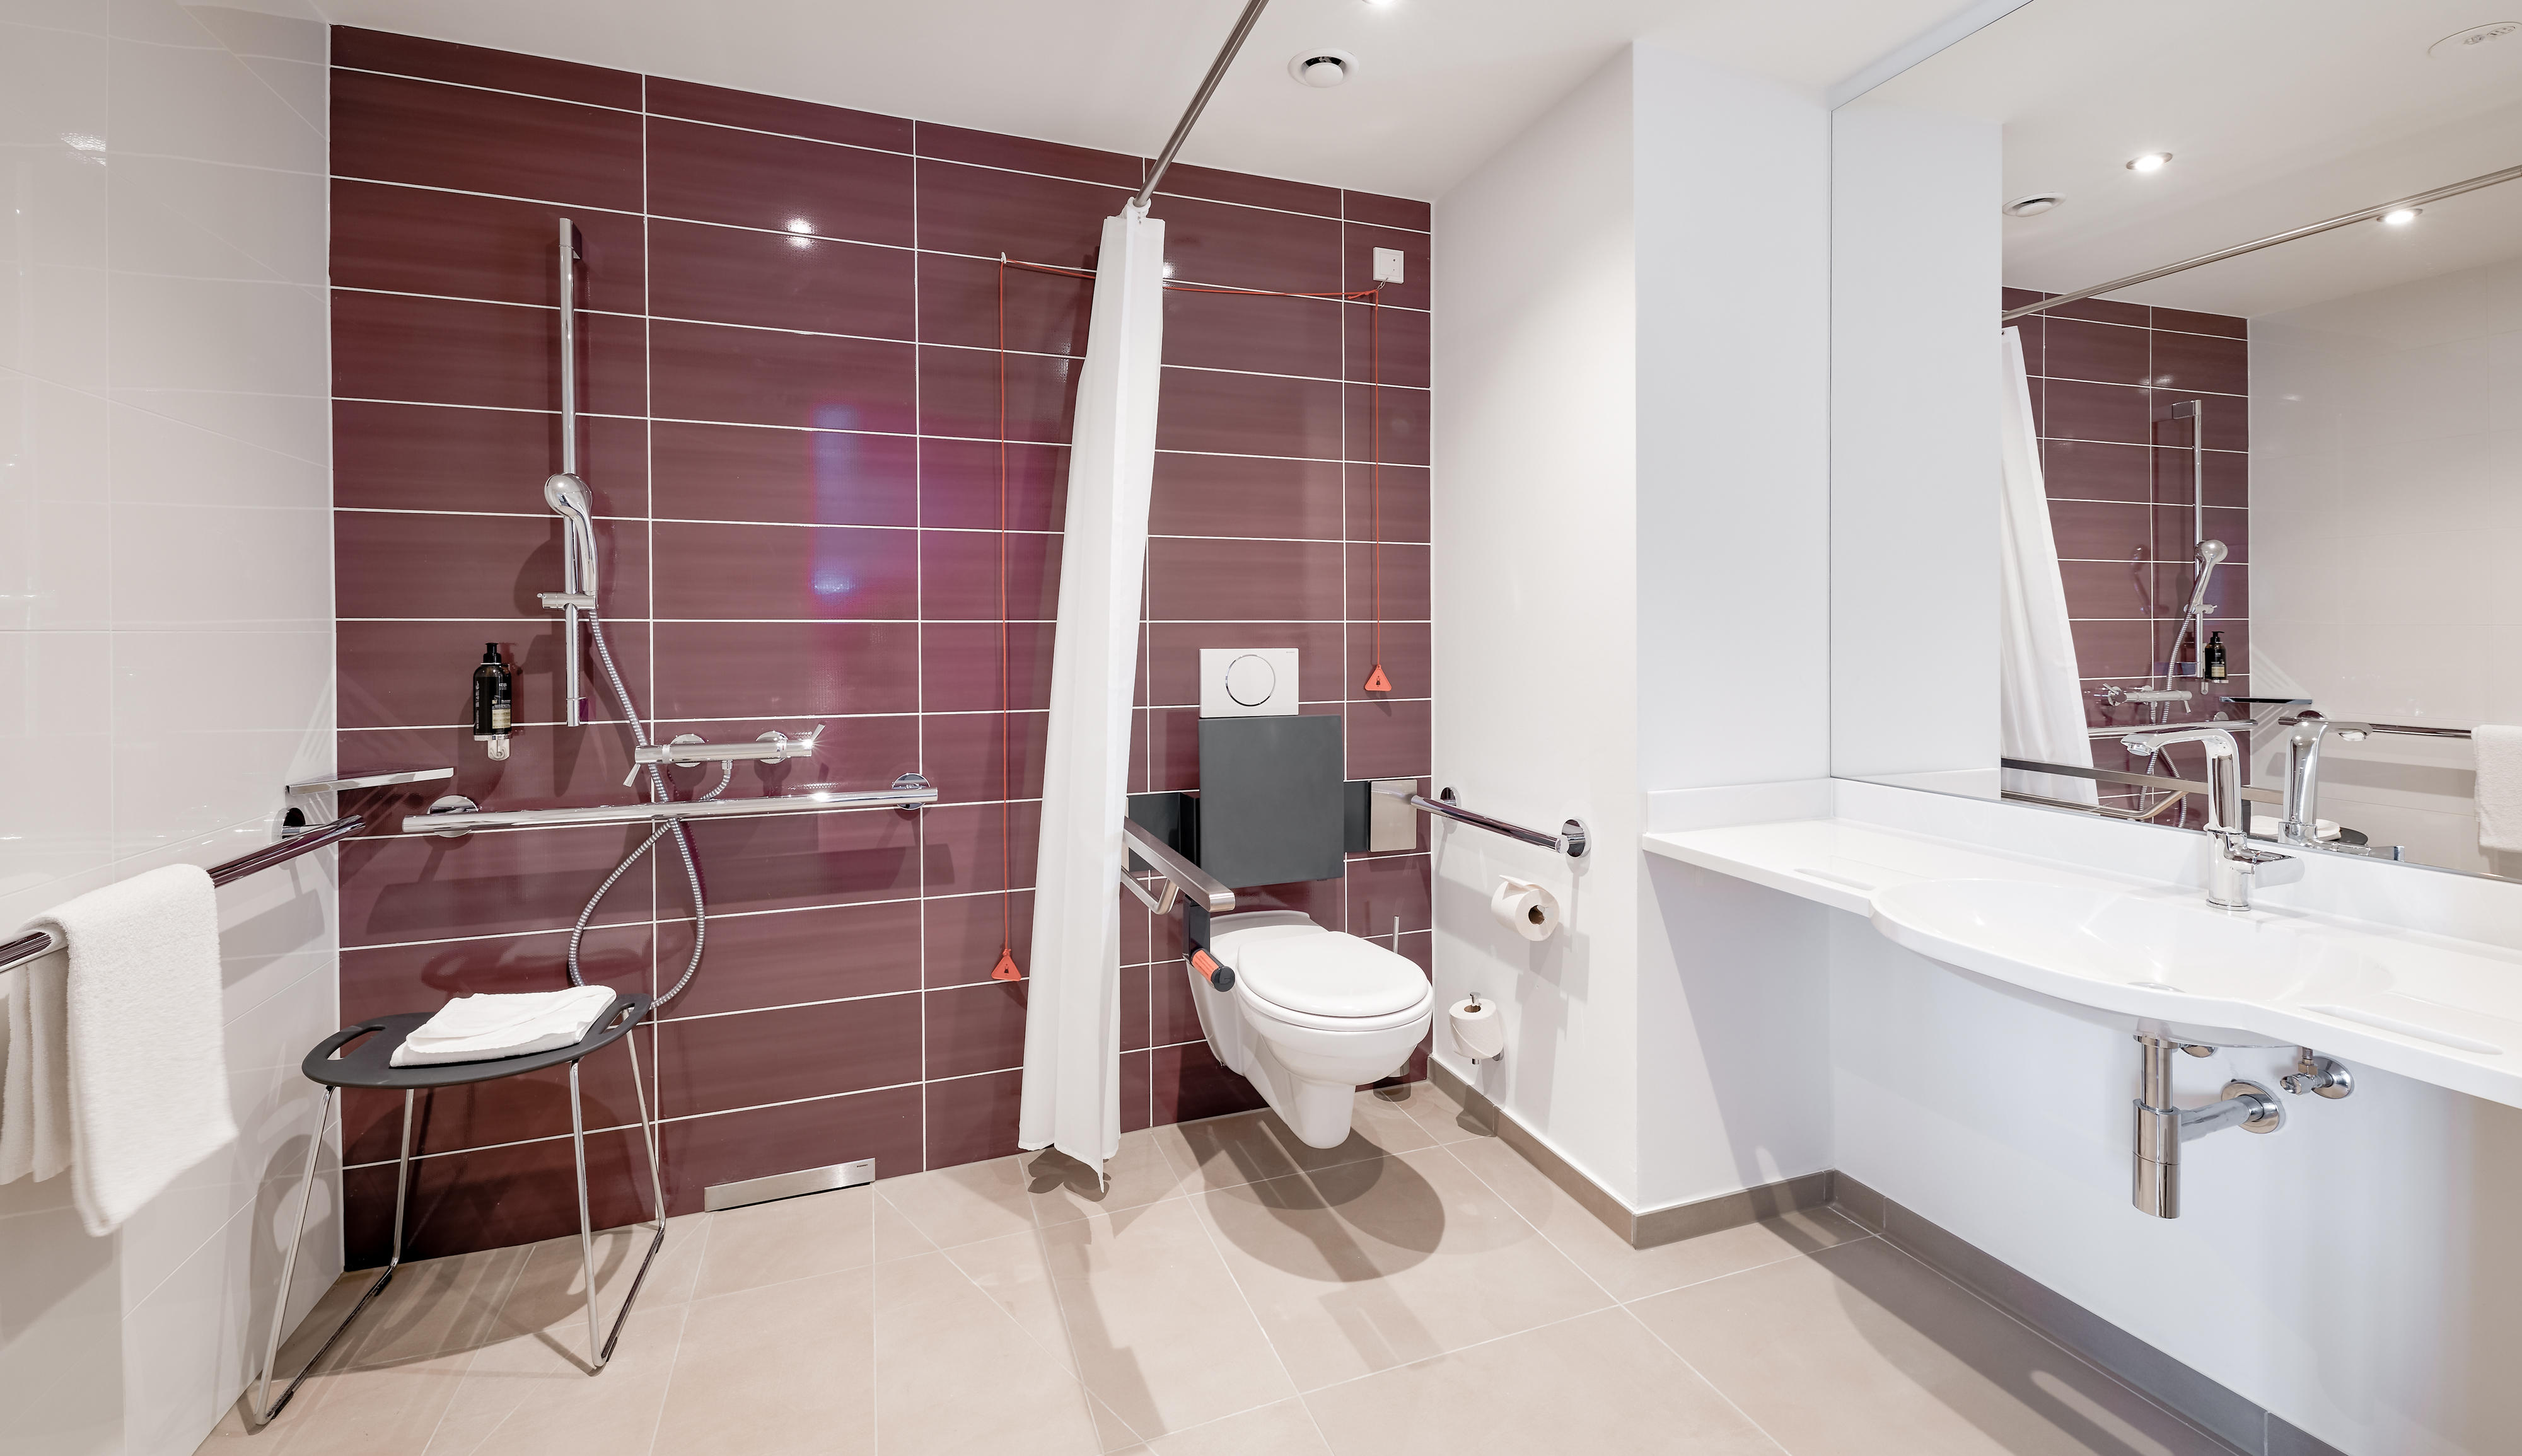 Premier Inn Saarbrucken City Congresshalle hotel accessible wet room with walk in shower